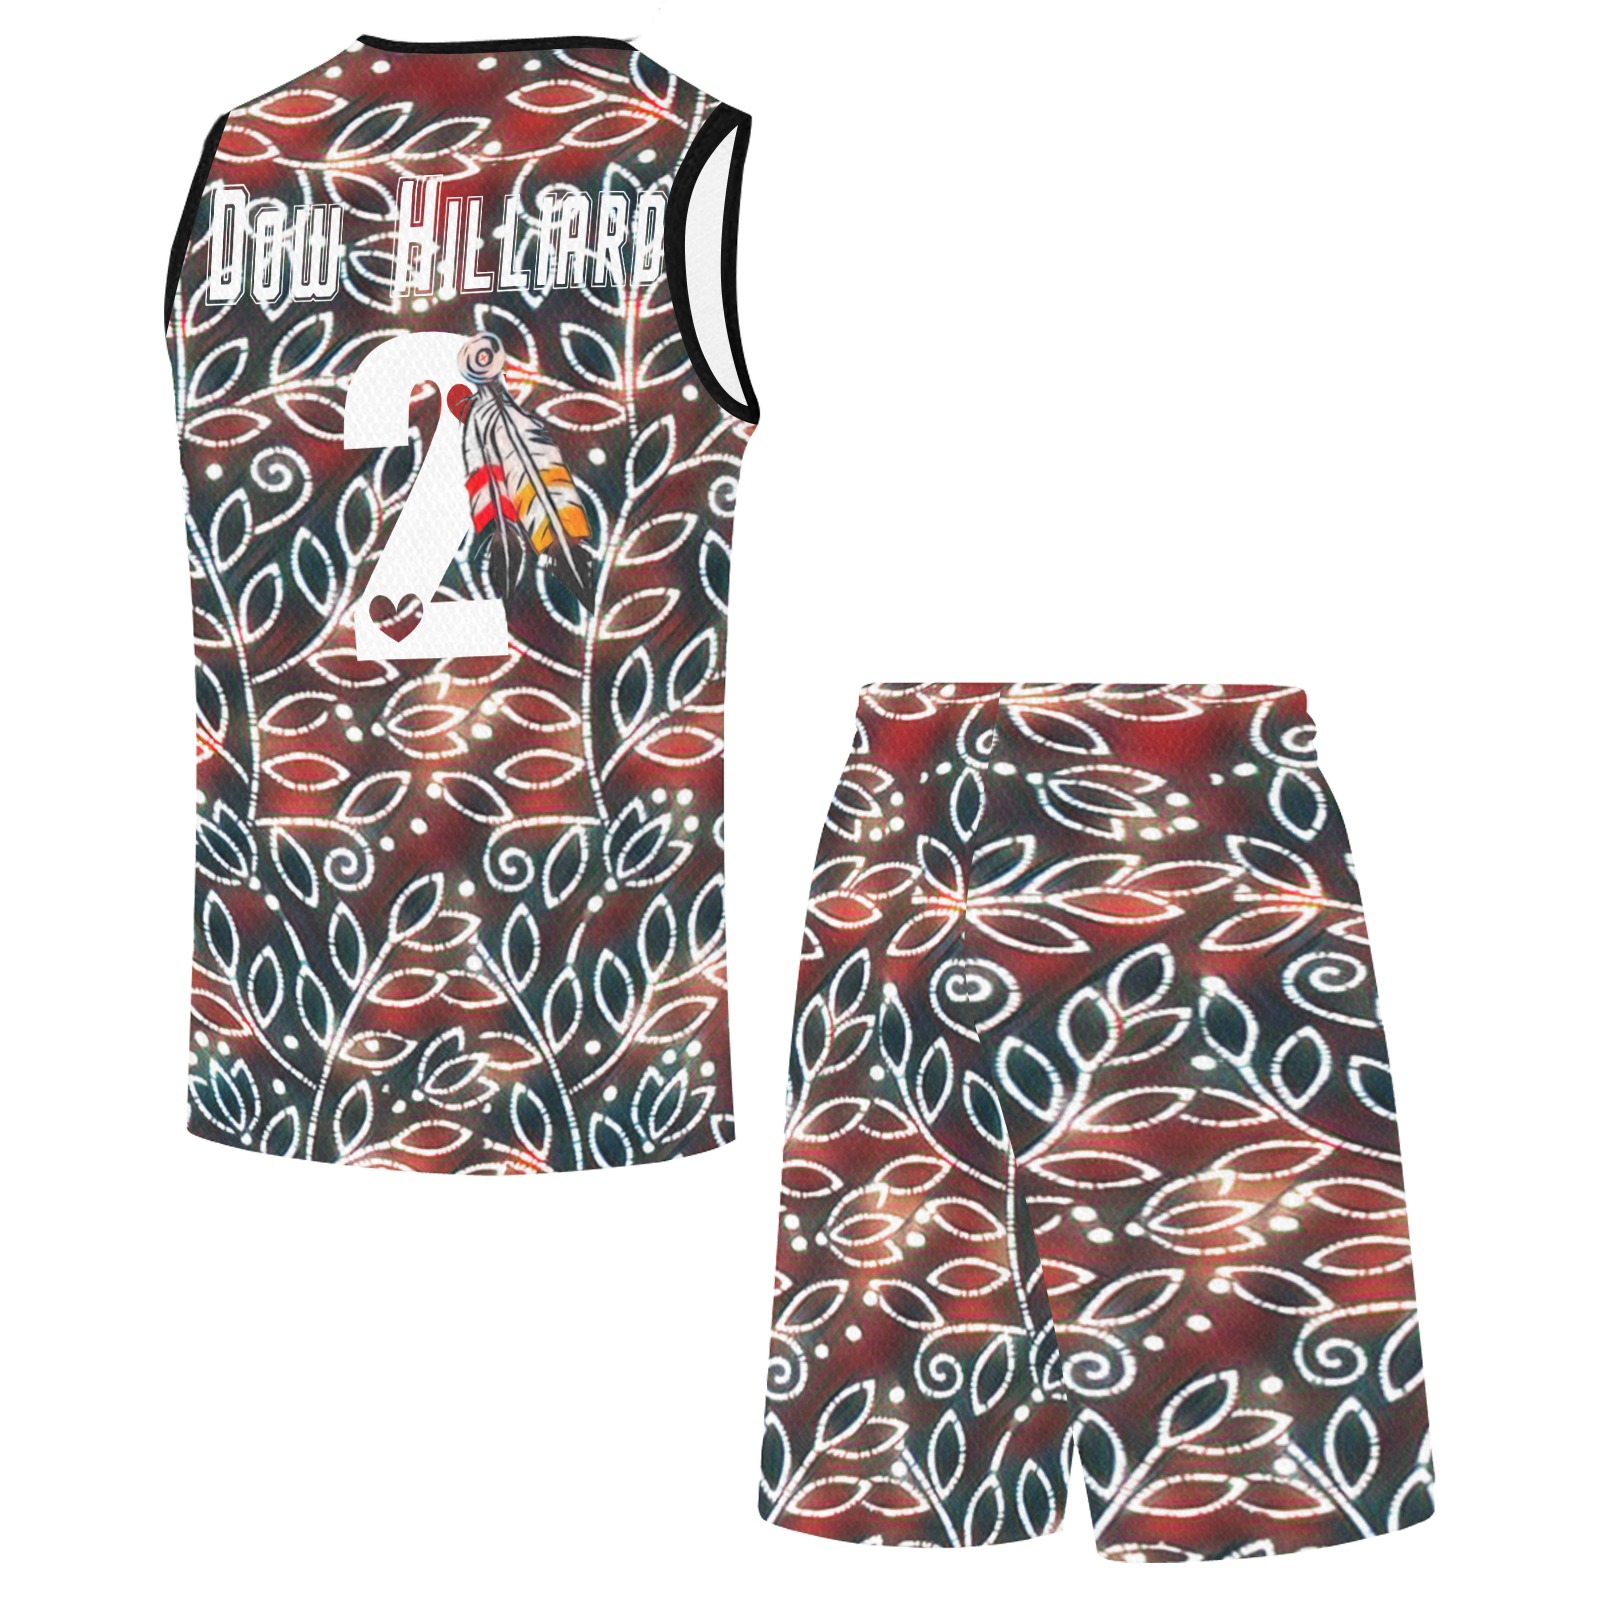 Dow Hiliiard 2 All Over Print Basketball Uniform